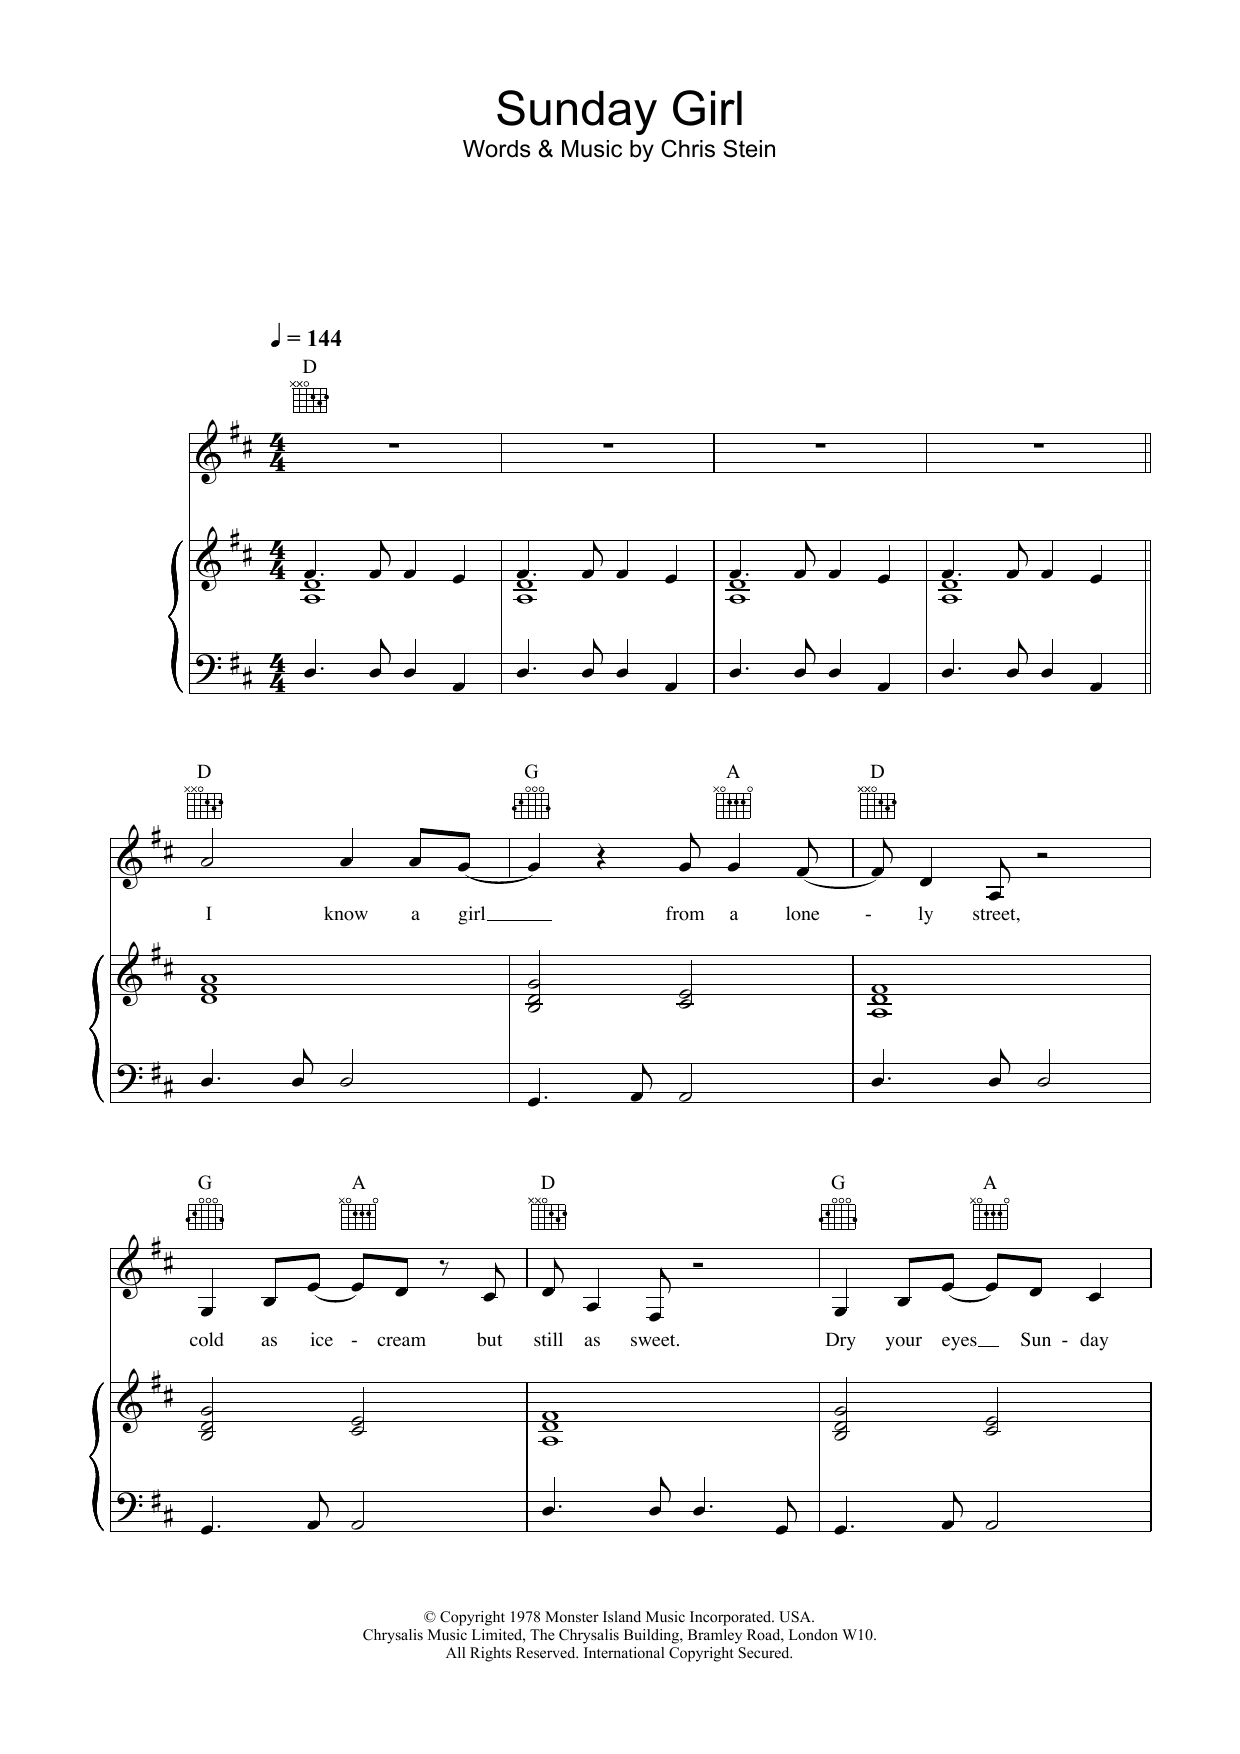 Blondie Sunday Girl Sheet Music Notes & Chords for Lyrics & Chords - Download or Print PDF